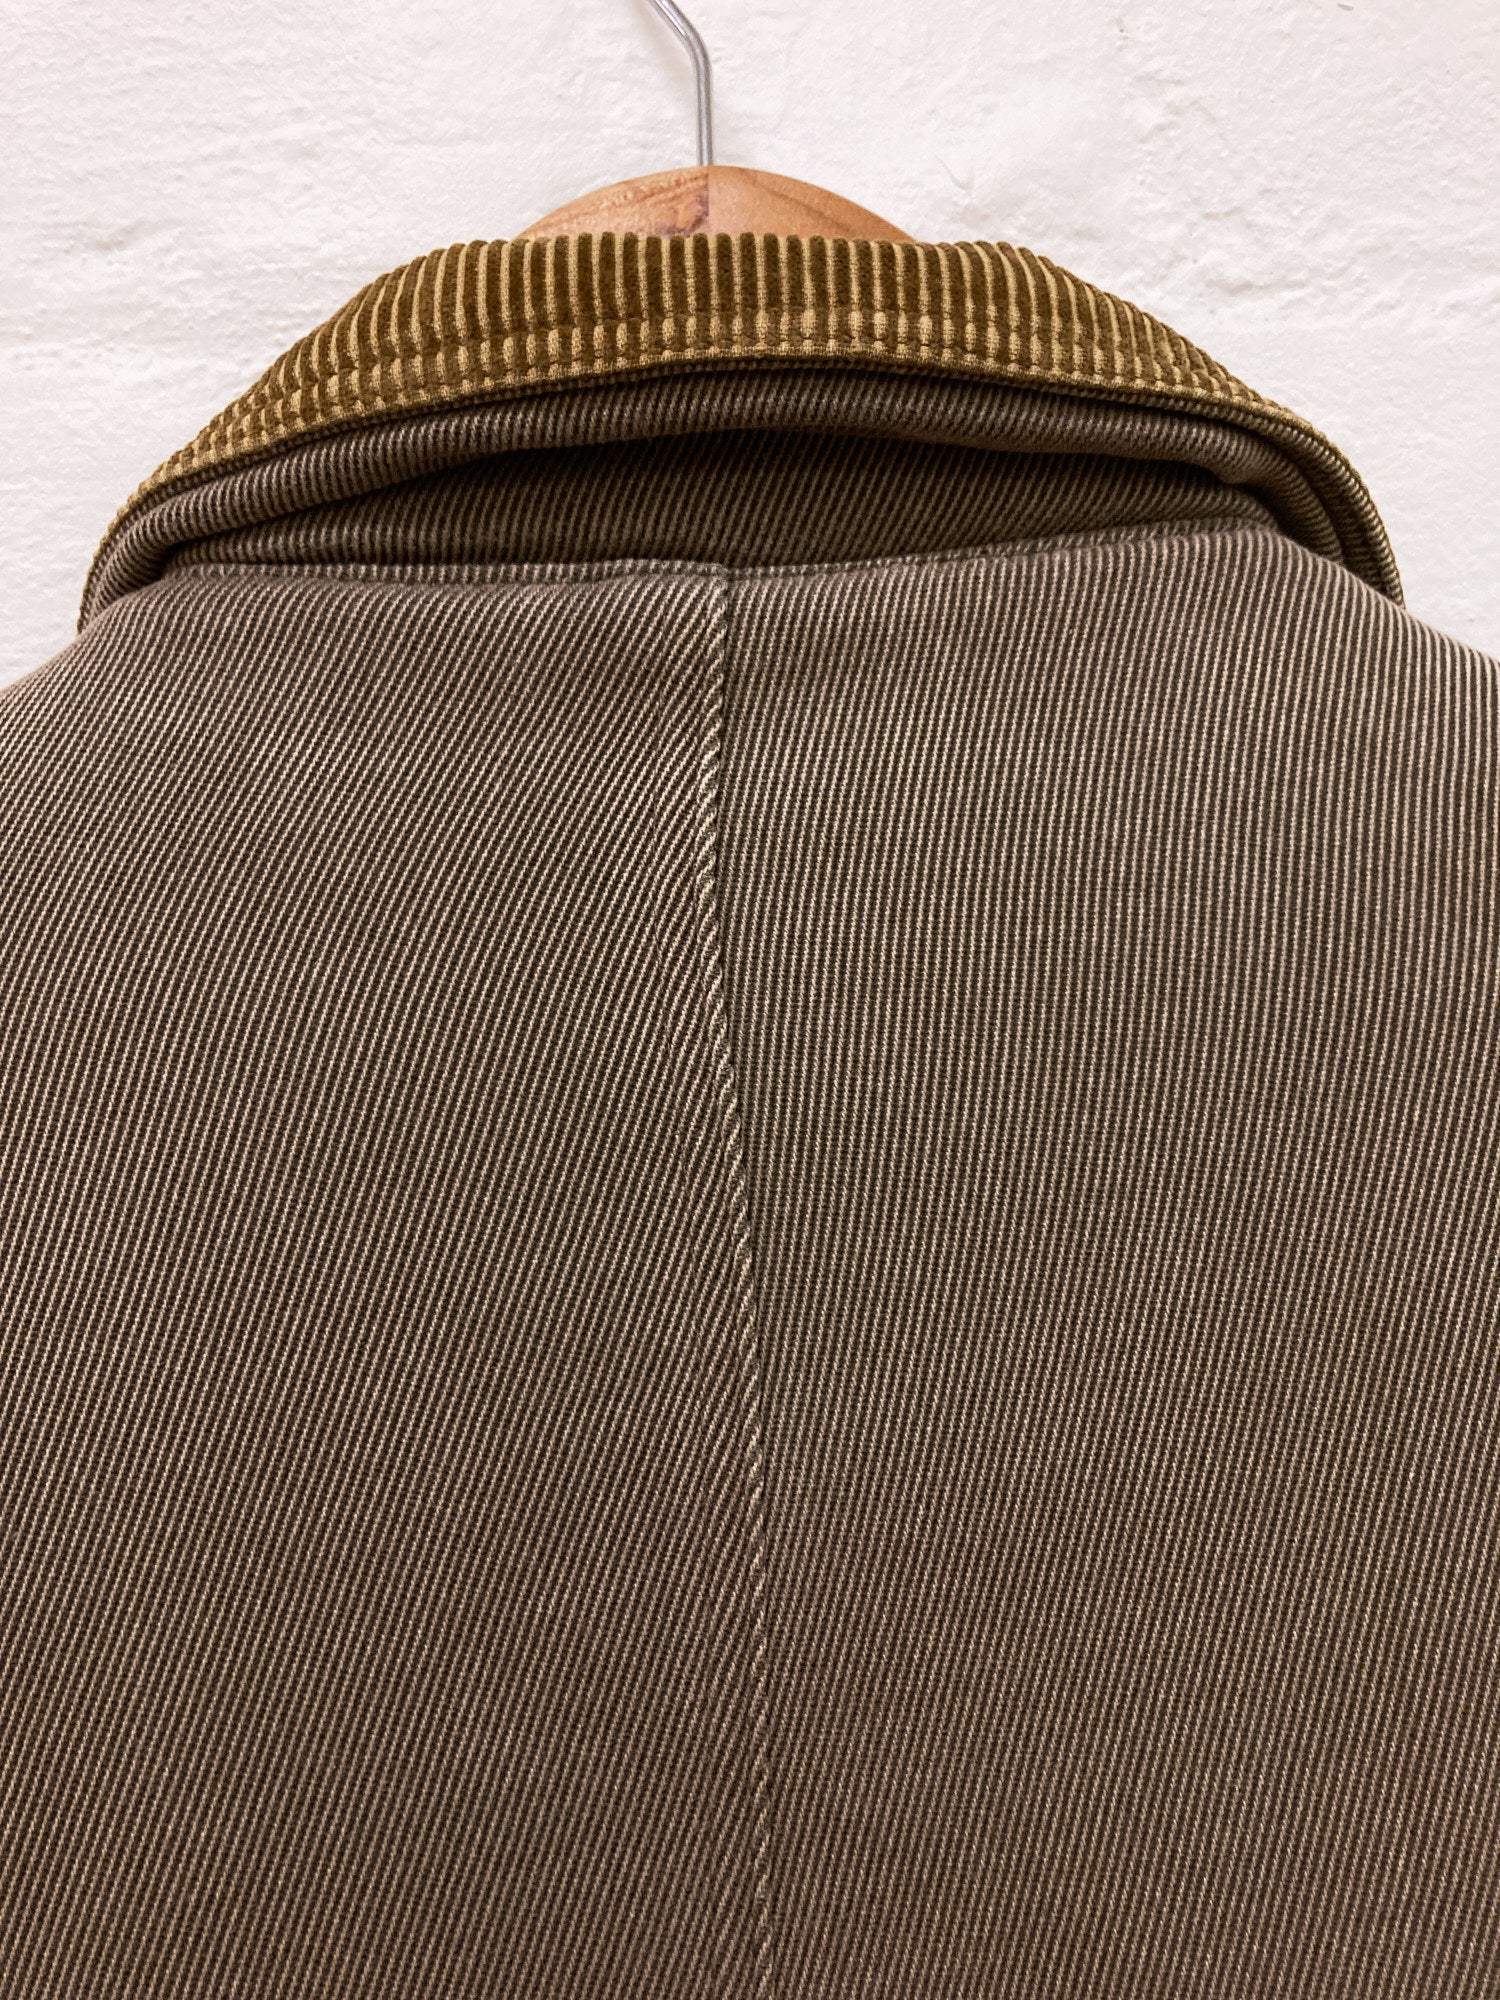 Example by Missoni padded khaki corduroy collar jacket - L